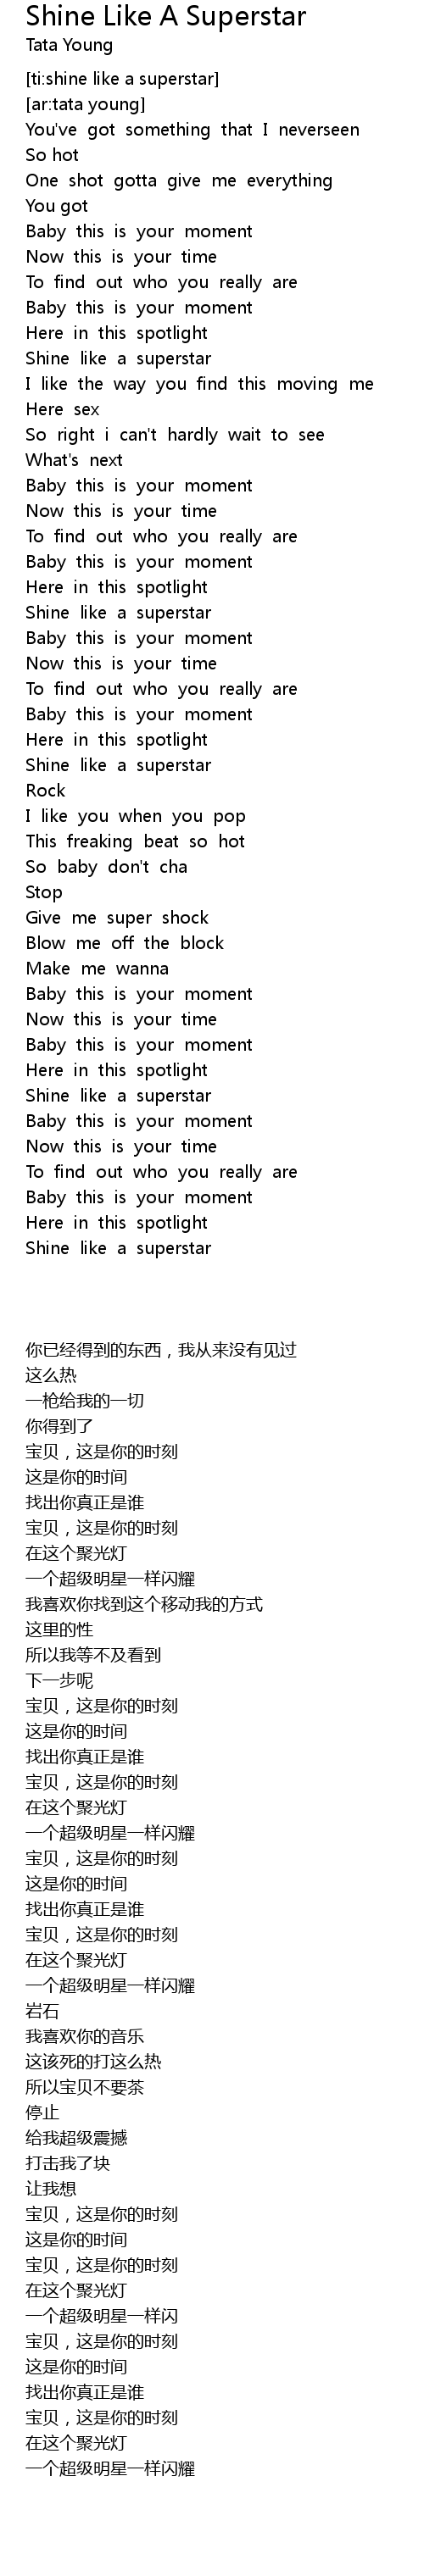 Shine Like A Superstar Lyrics - Follow Lyrics